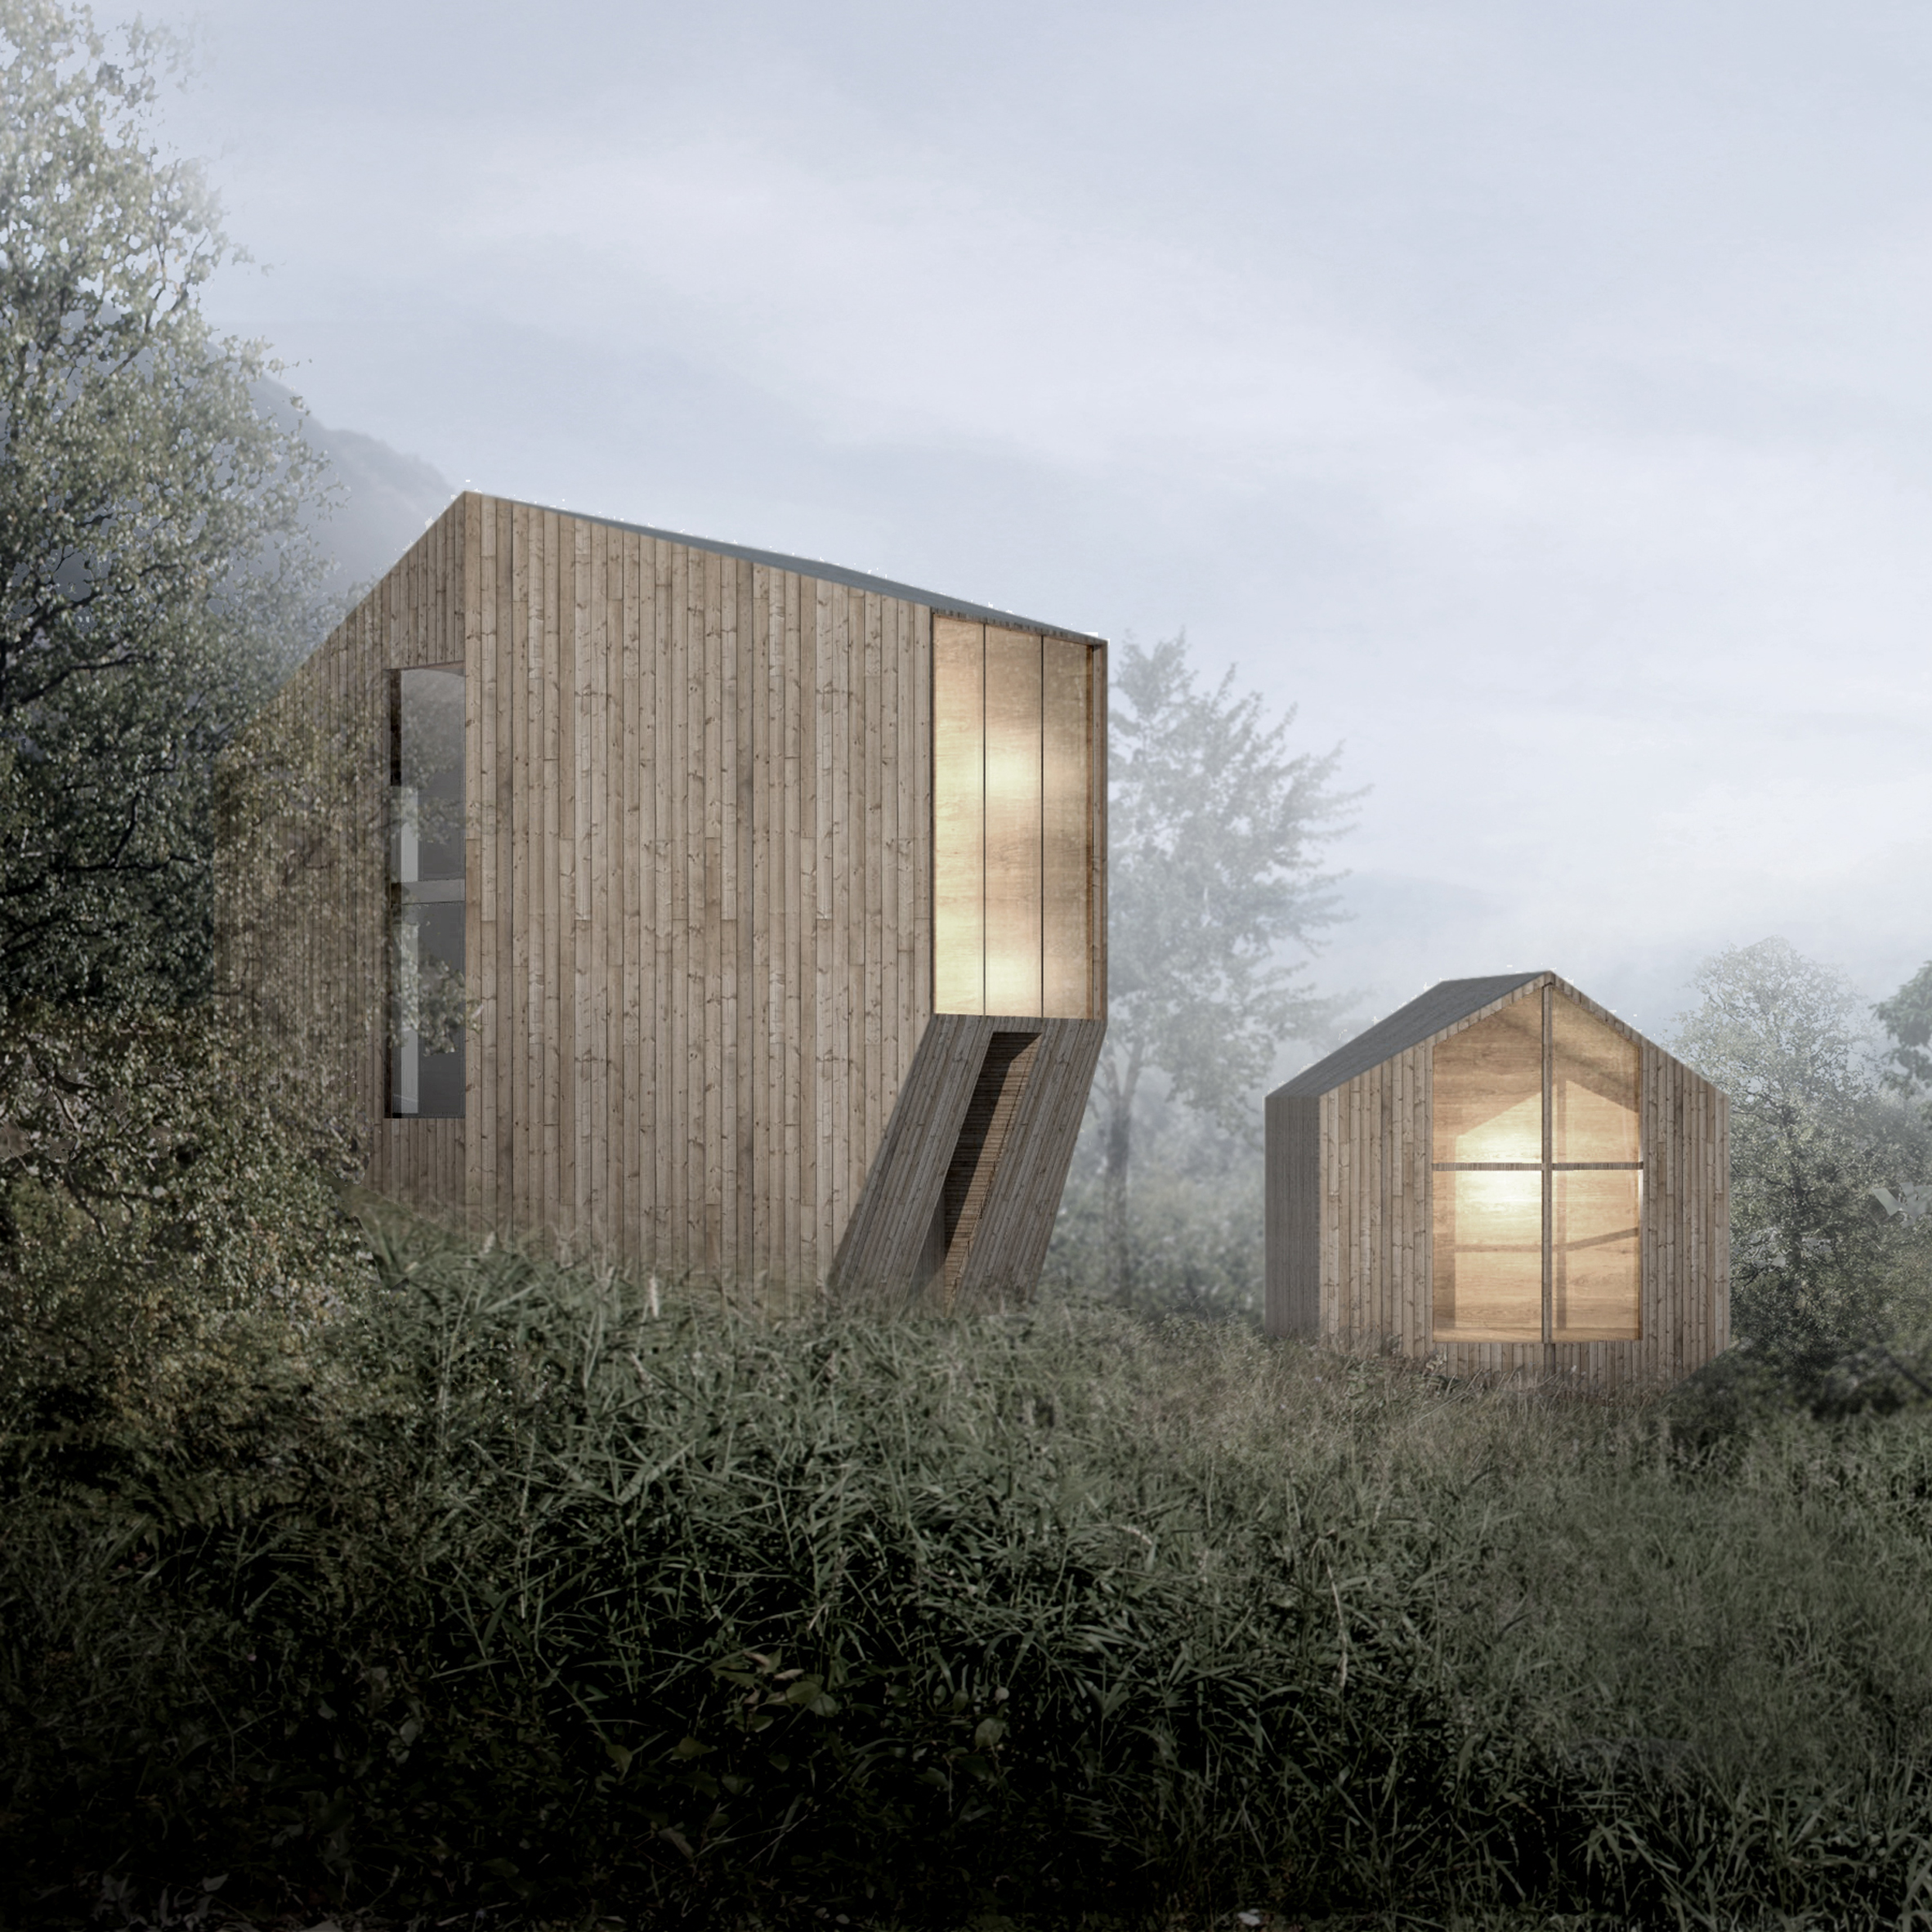 Reiulf Ramstad Designs Angular Wooden Cabins For A Norwegian